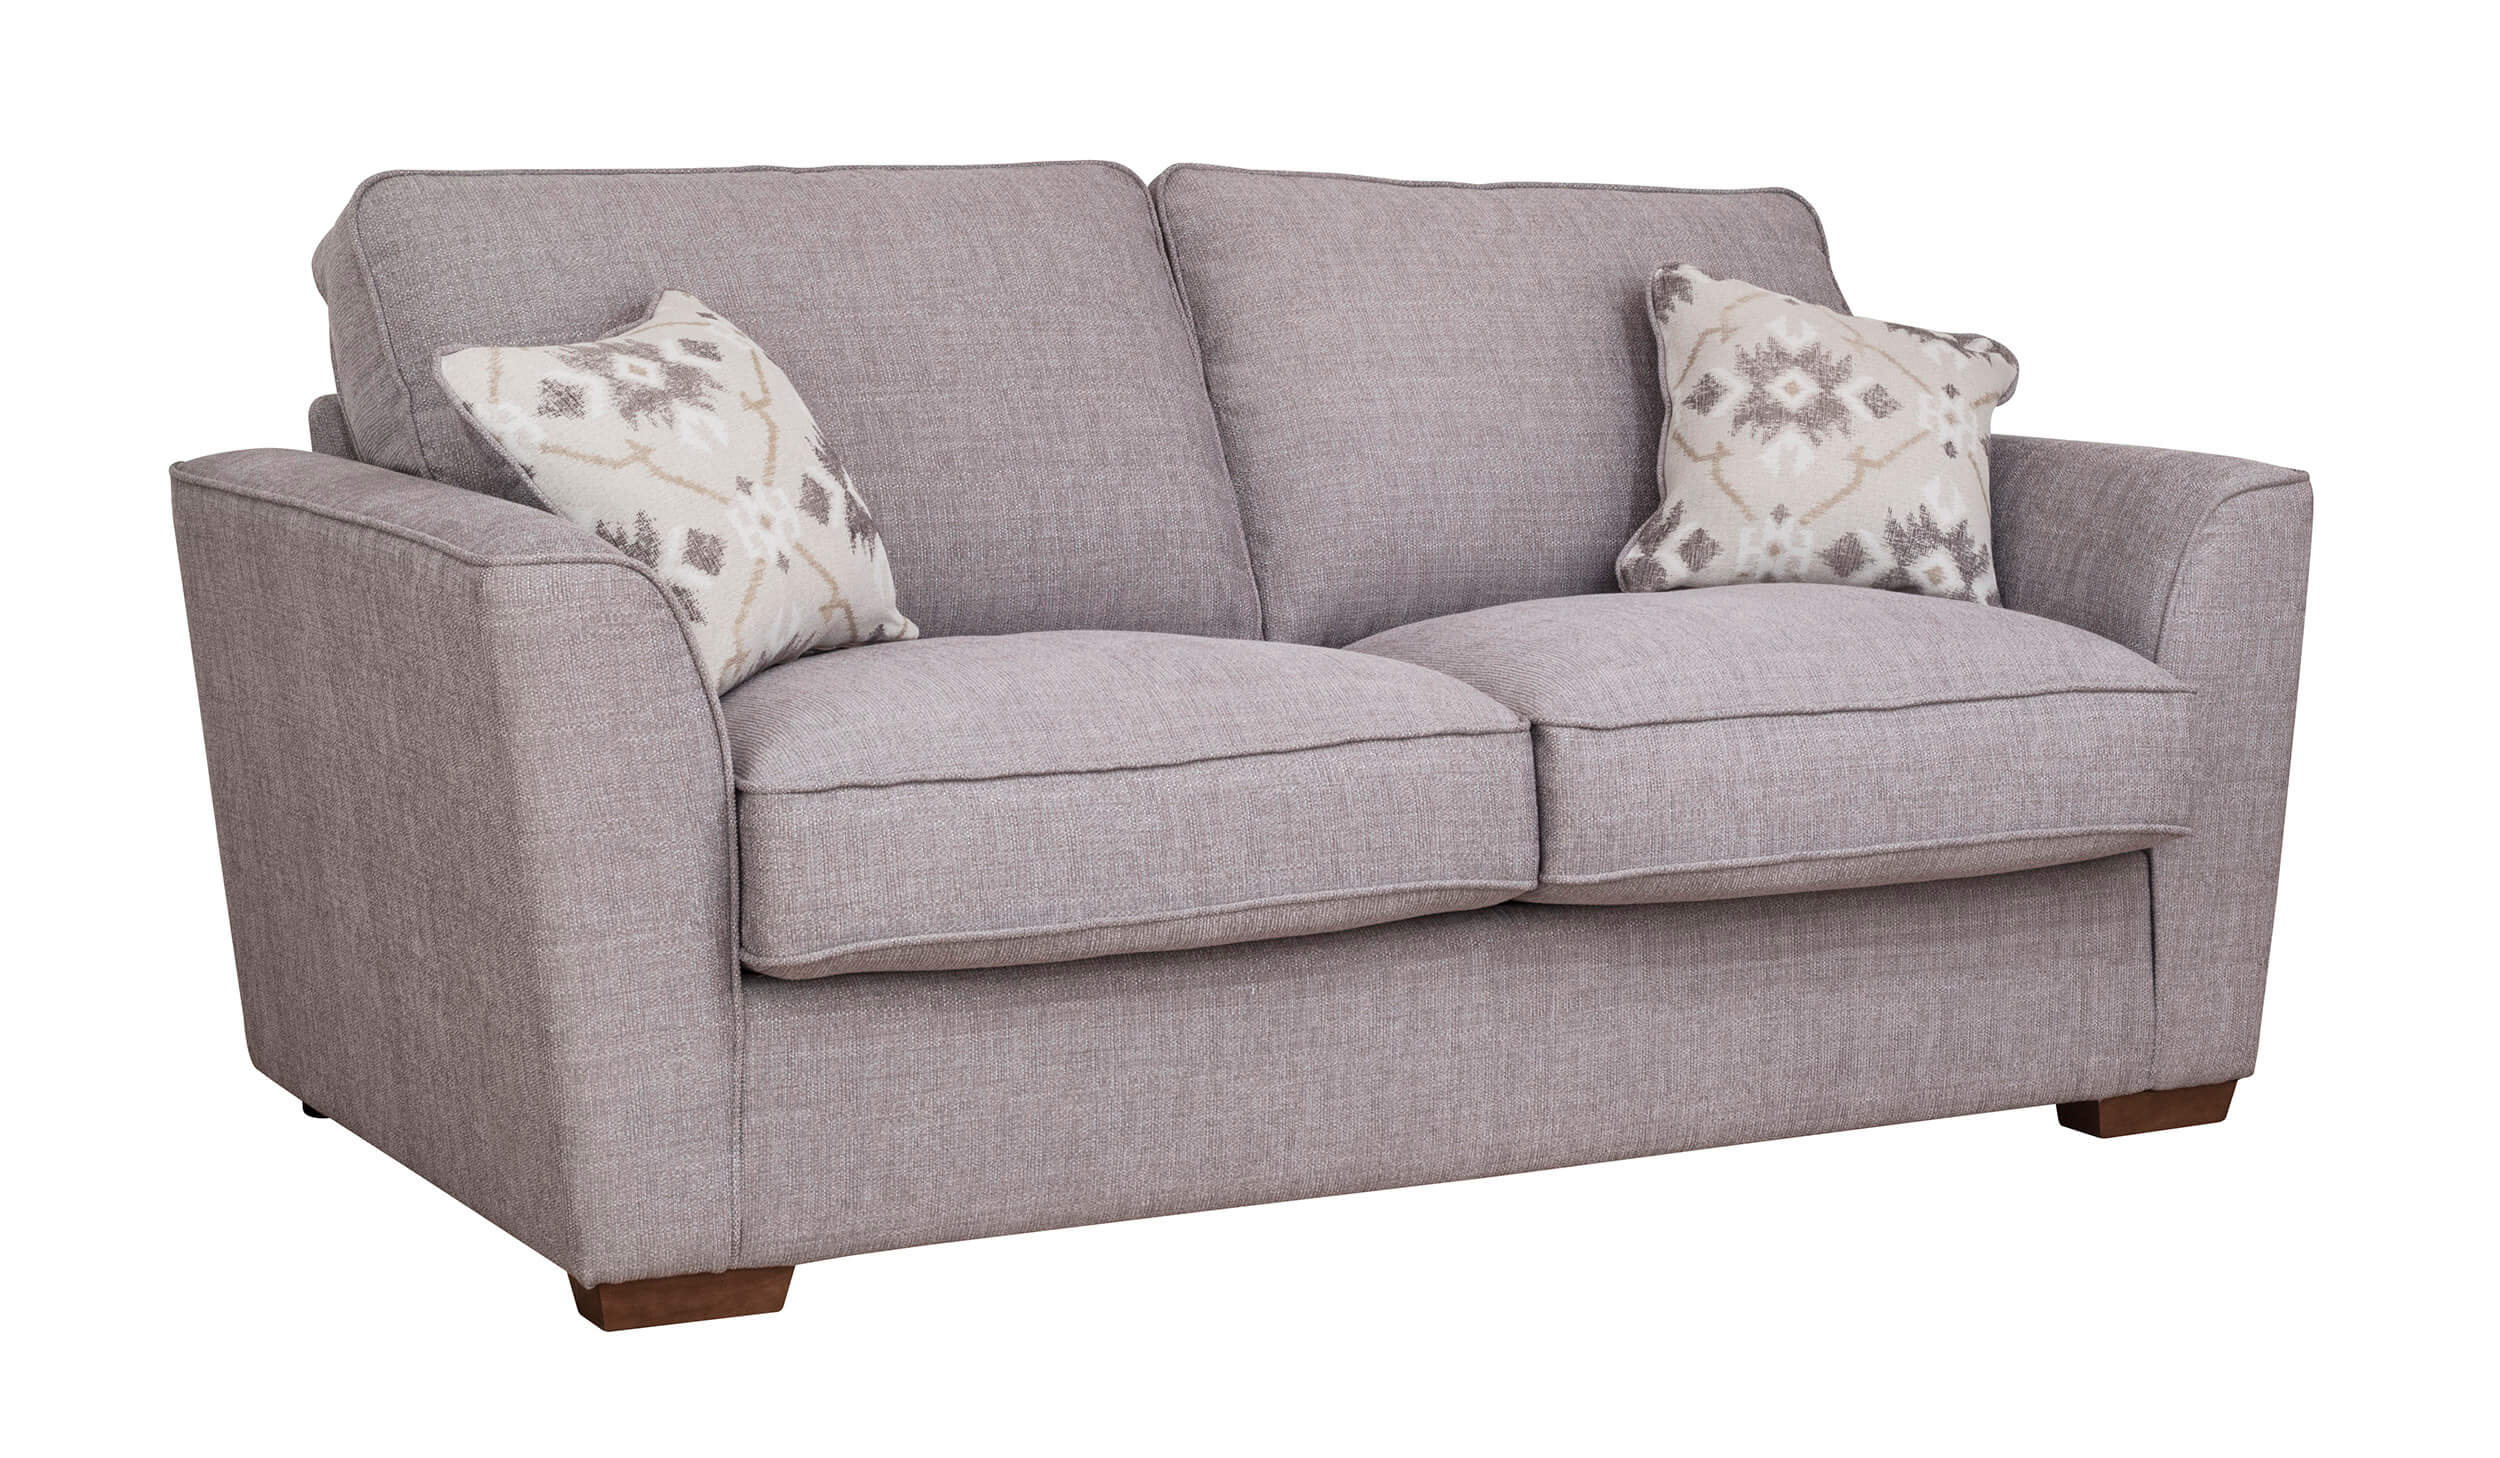 Showing image for Ellsworth sofa bed - large